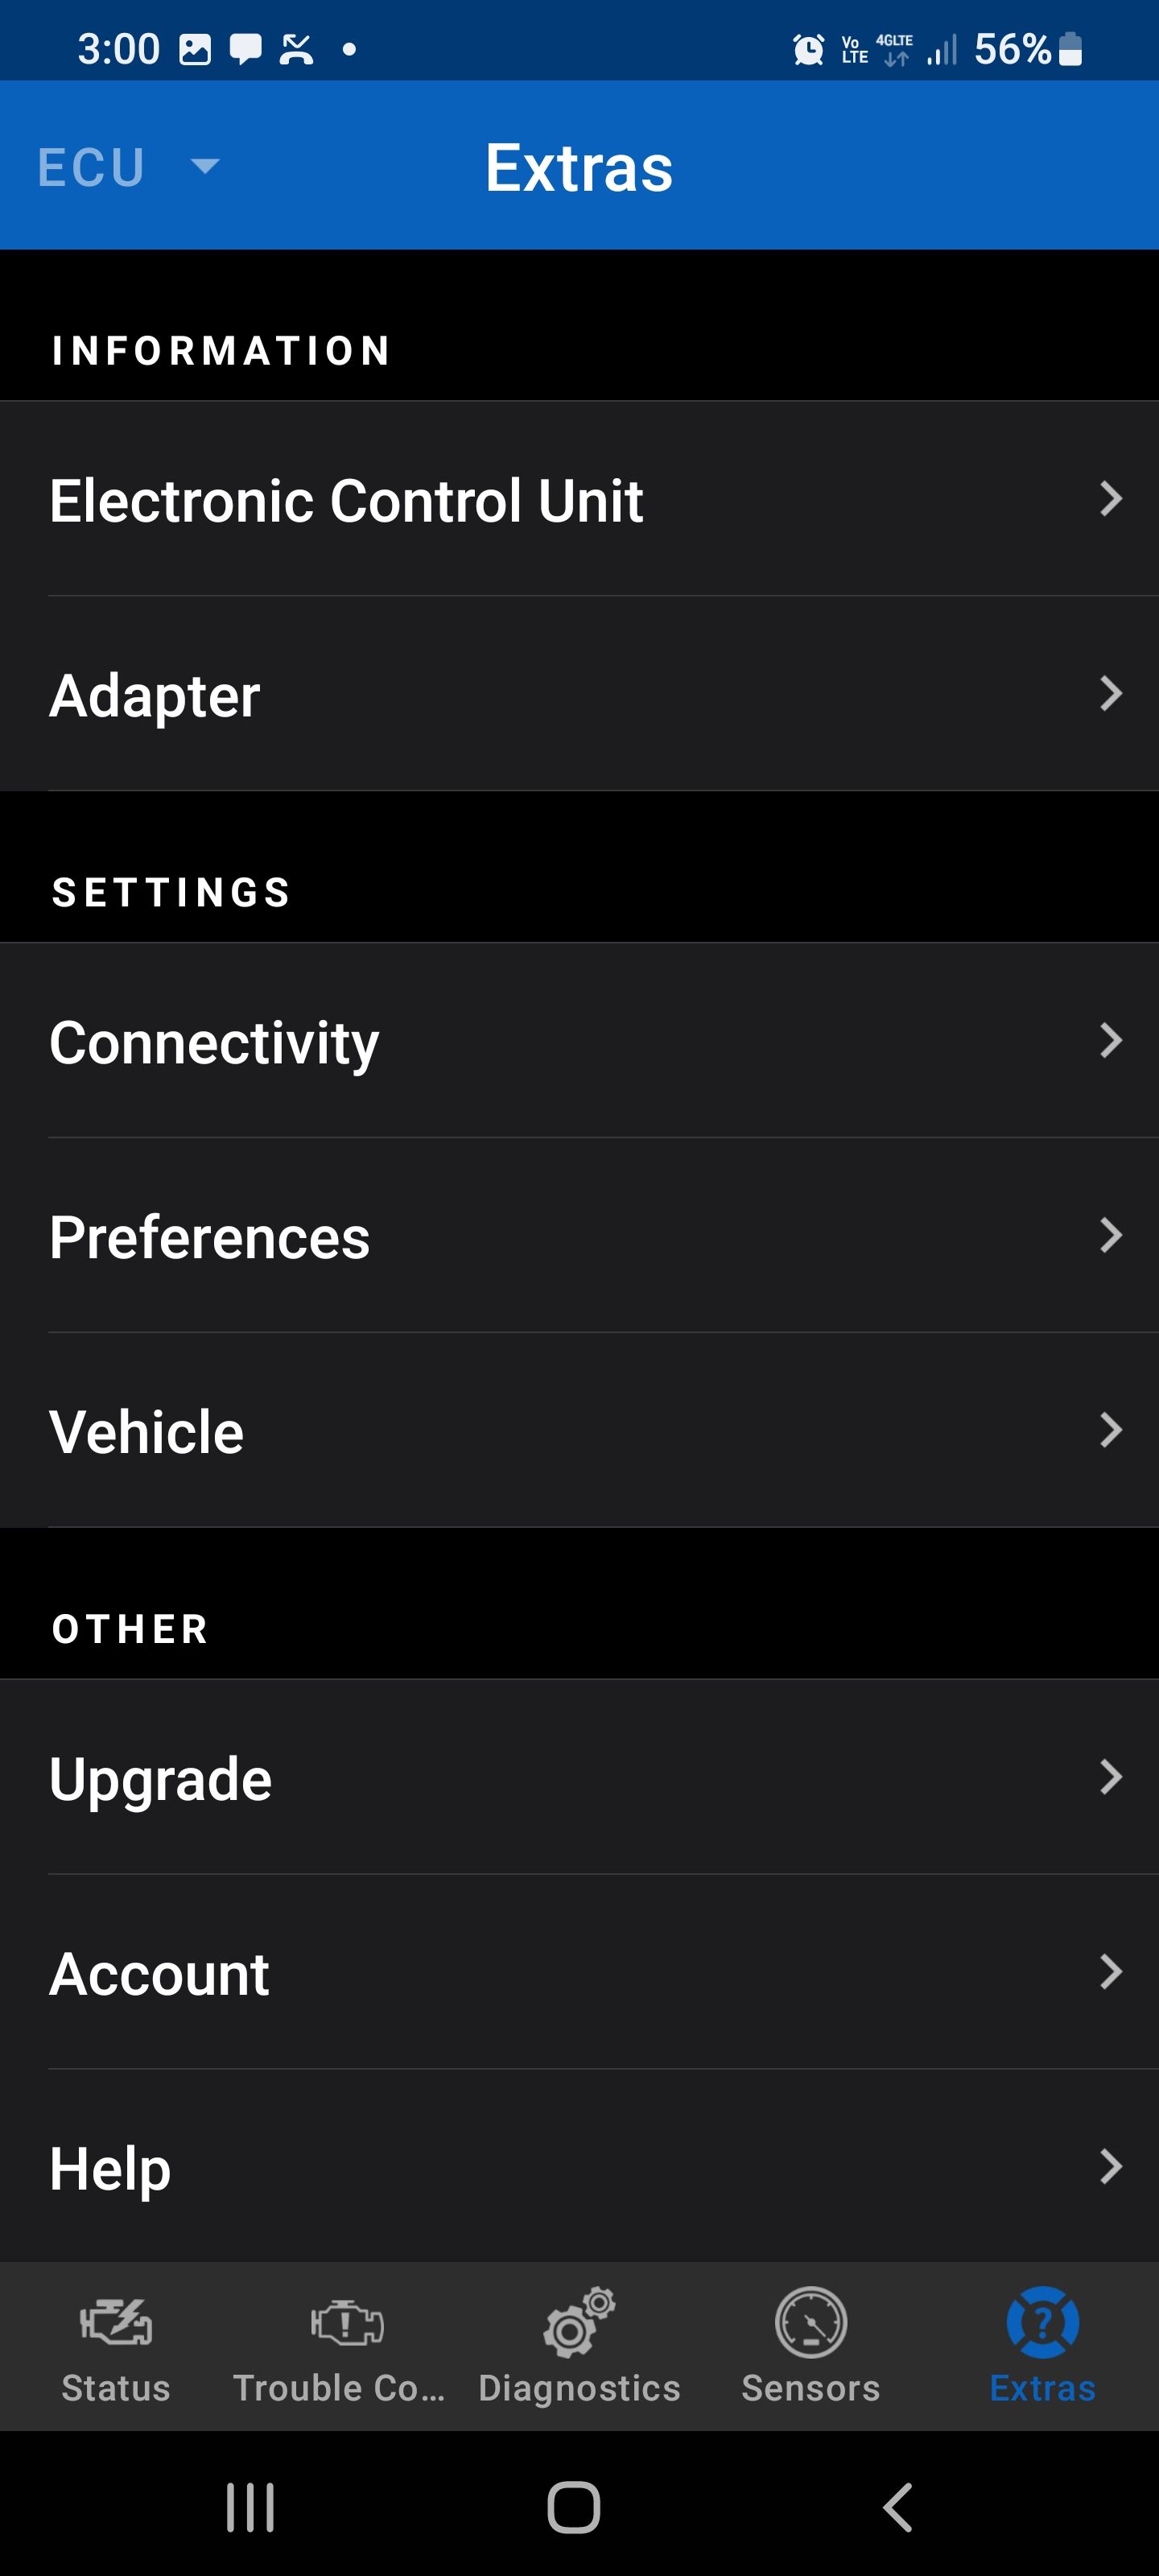 OBD Auto Doctor app screenshot showing Extras menu